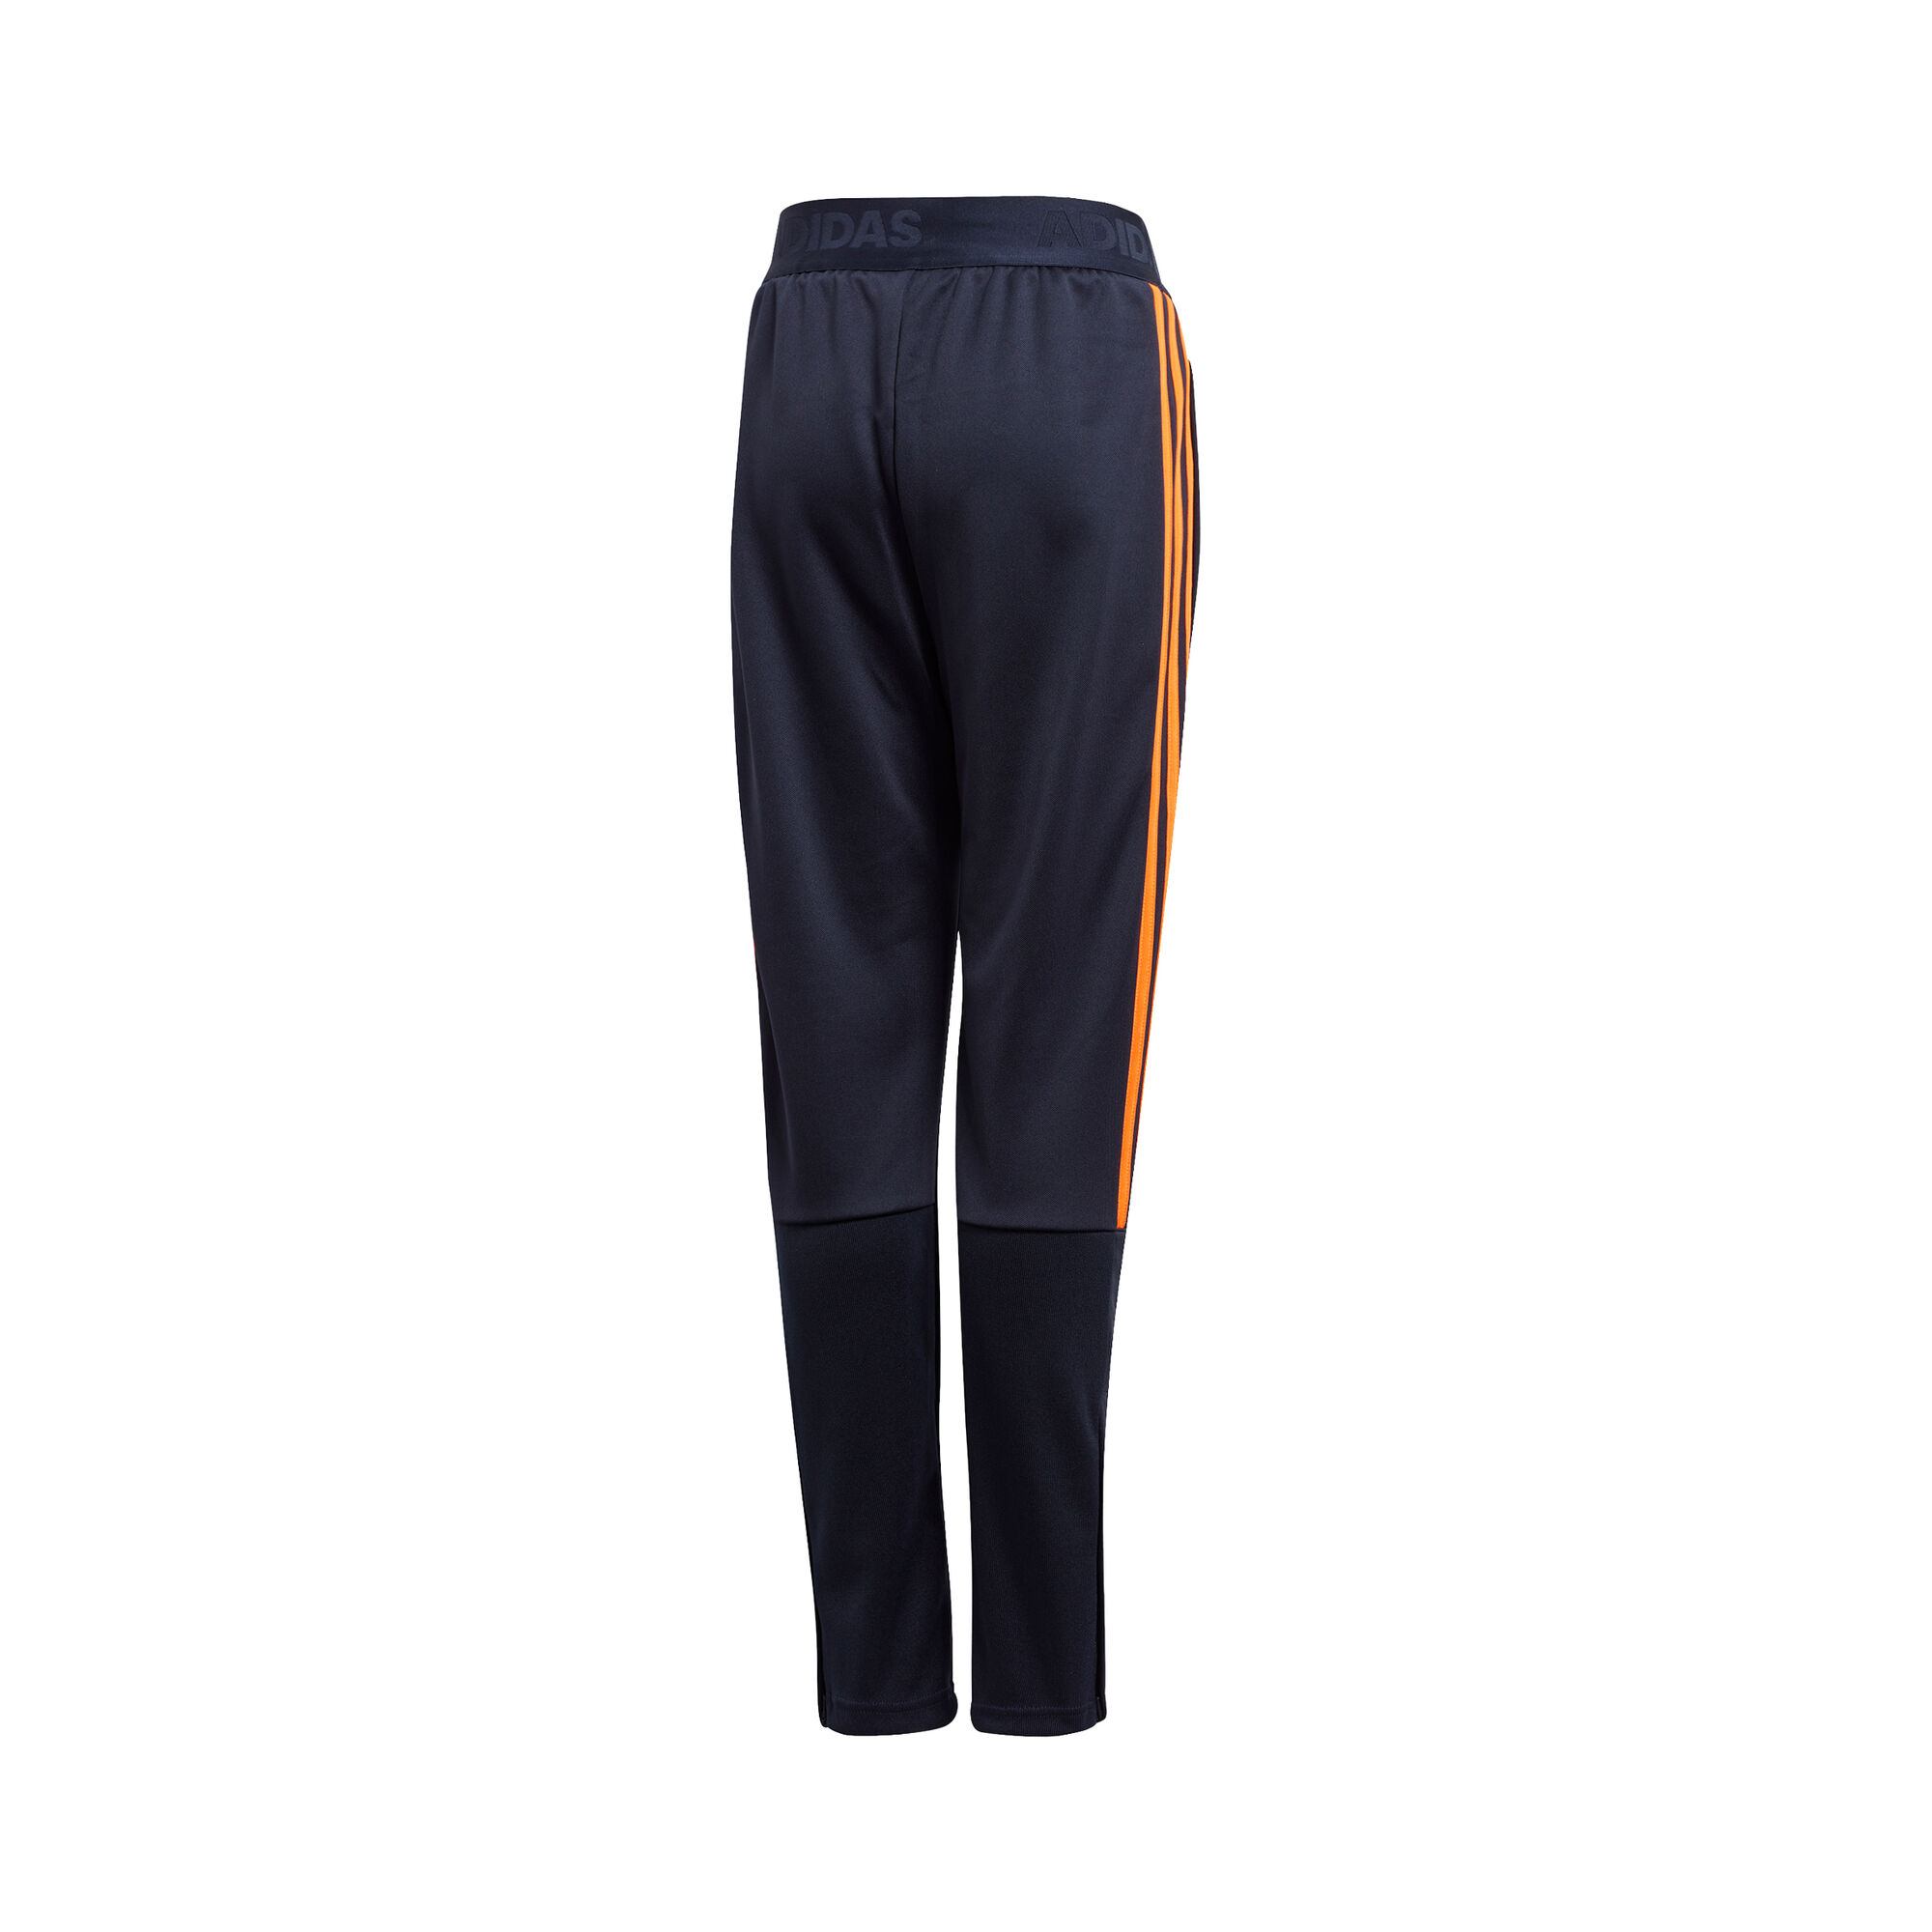 Buy adidas Tiro 3-Stripes Training Pants Boys Dark Blue, Orange online